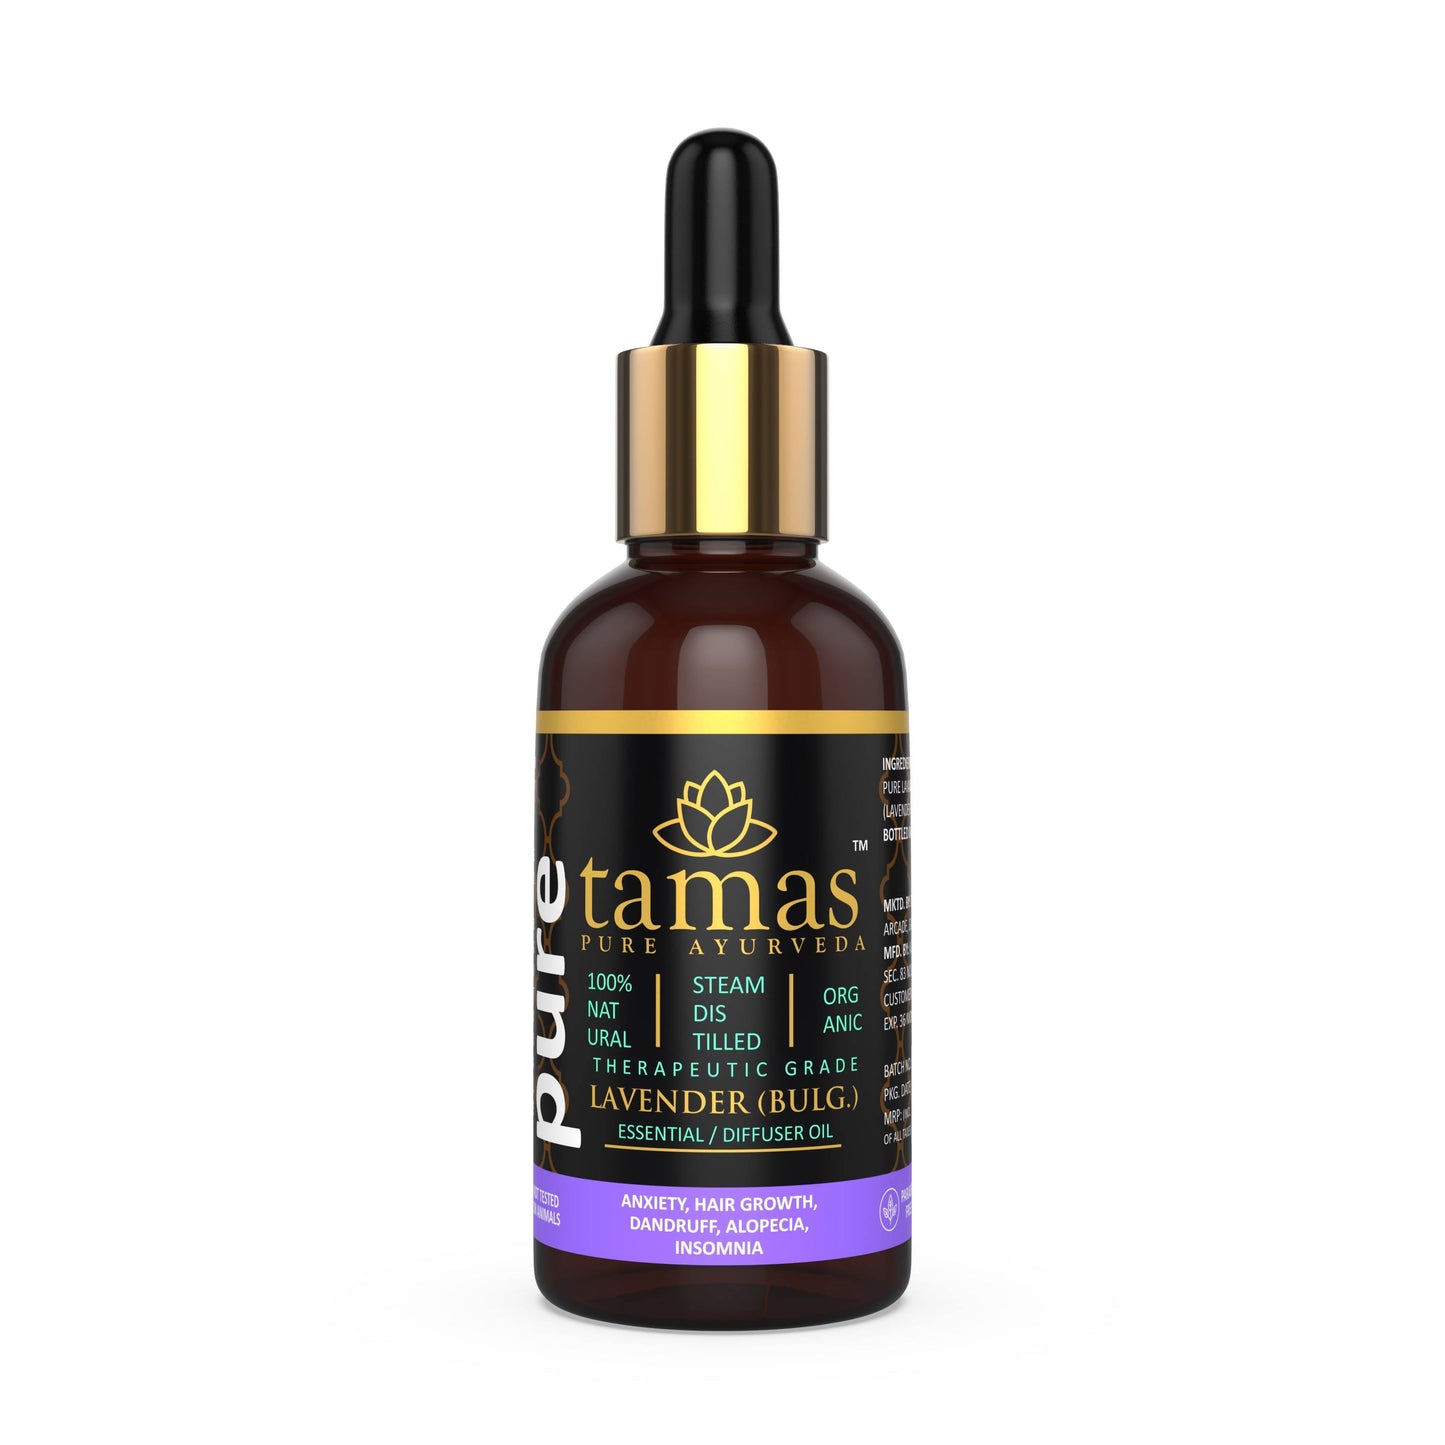 Tamas Pure Ayurveda 100% Organic Lavender (Bulg) Essential Oil-USDA Certified Organic-